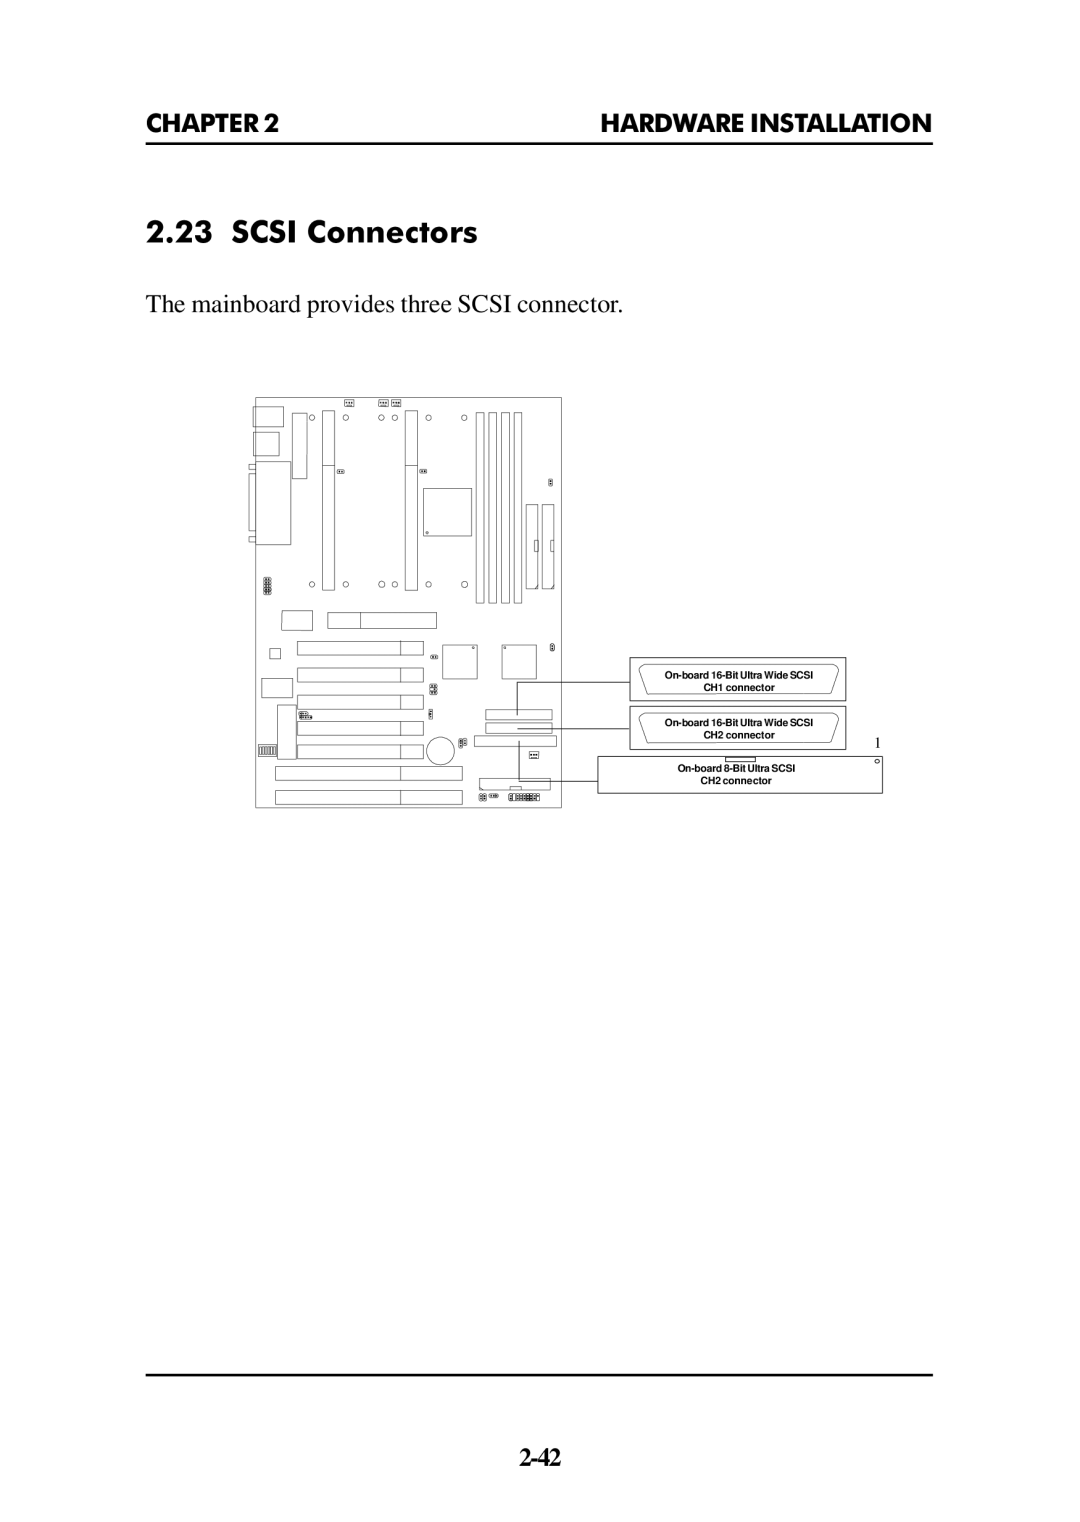 Intel ATX BX2 manual Scsi Connectors, Mainboard provides three Scsi connector 